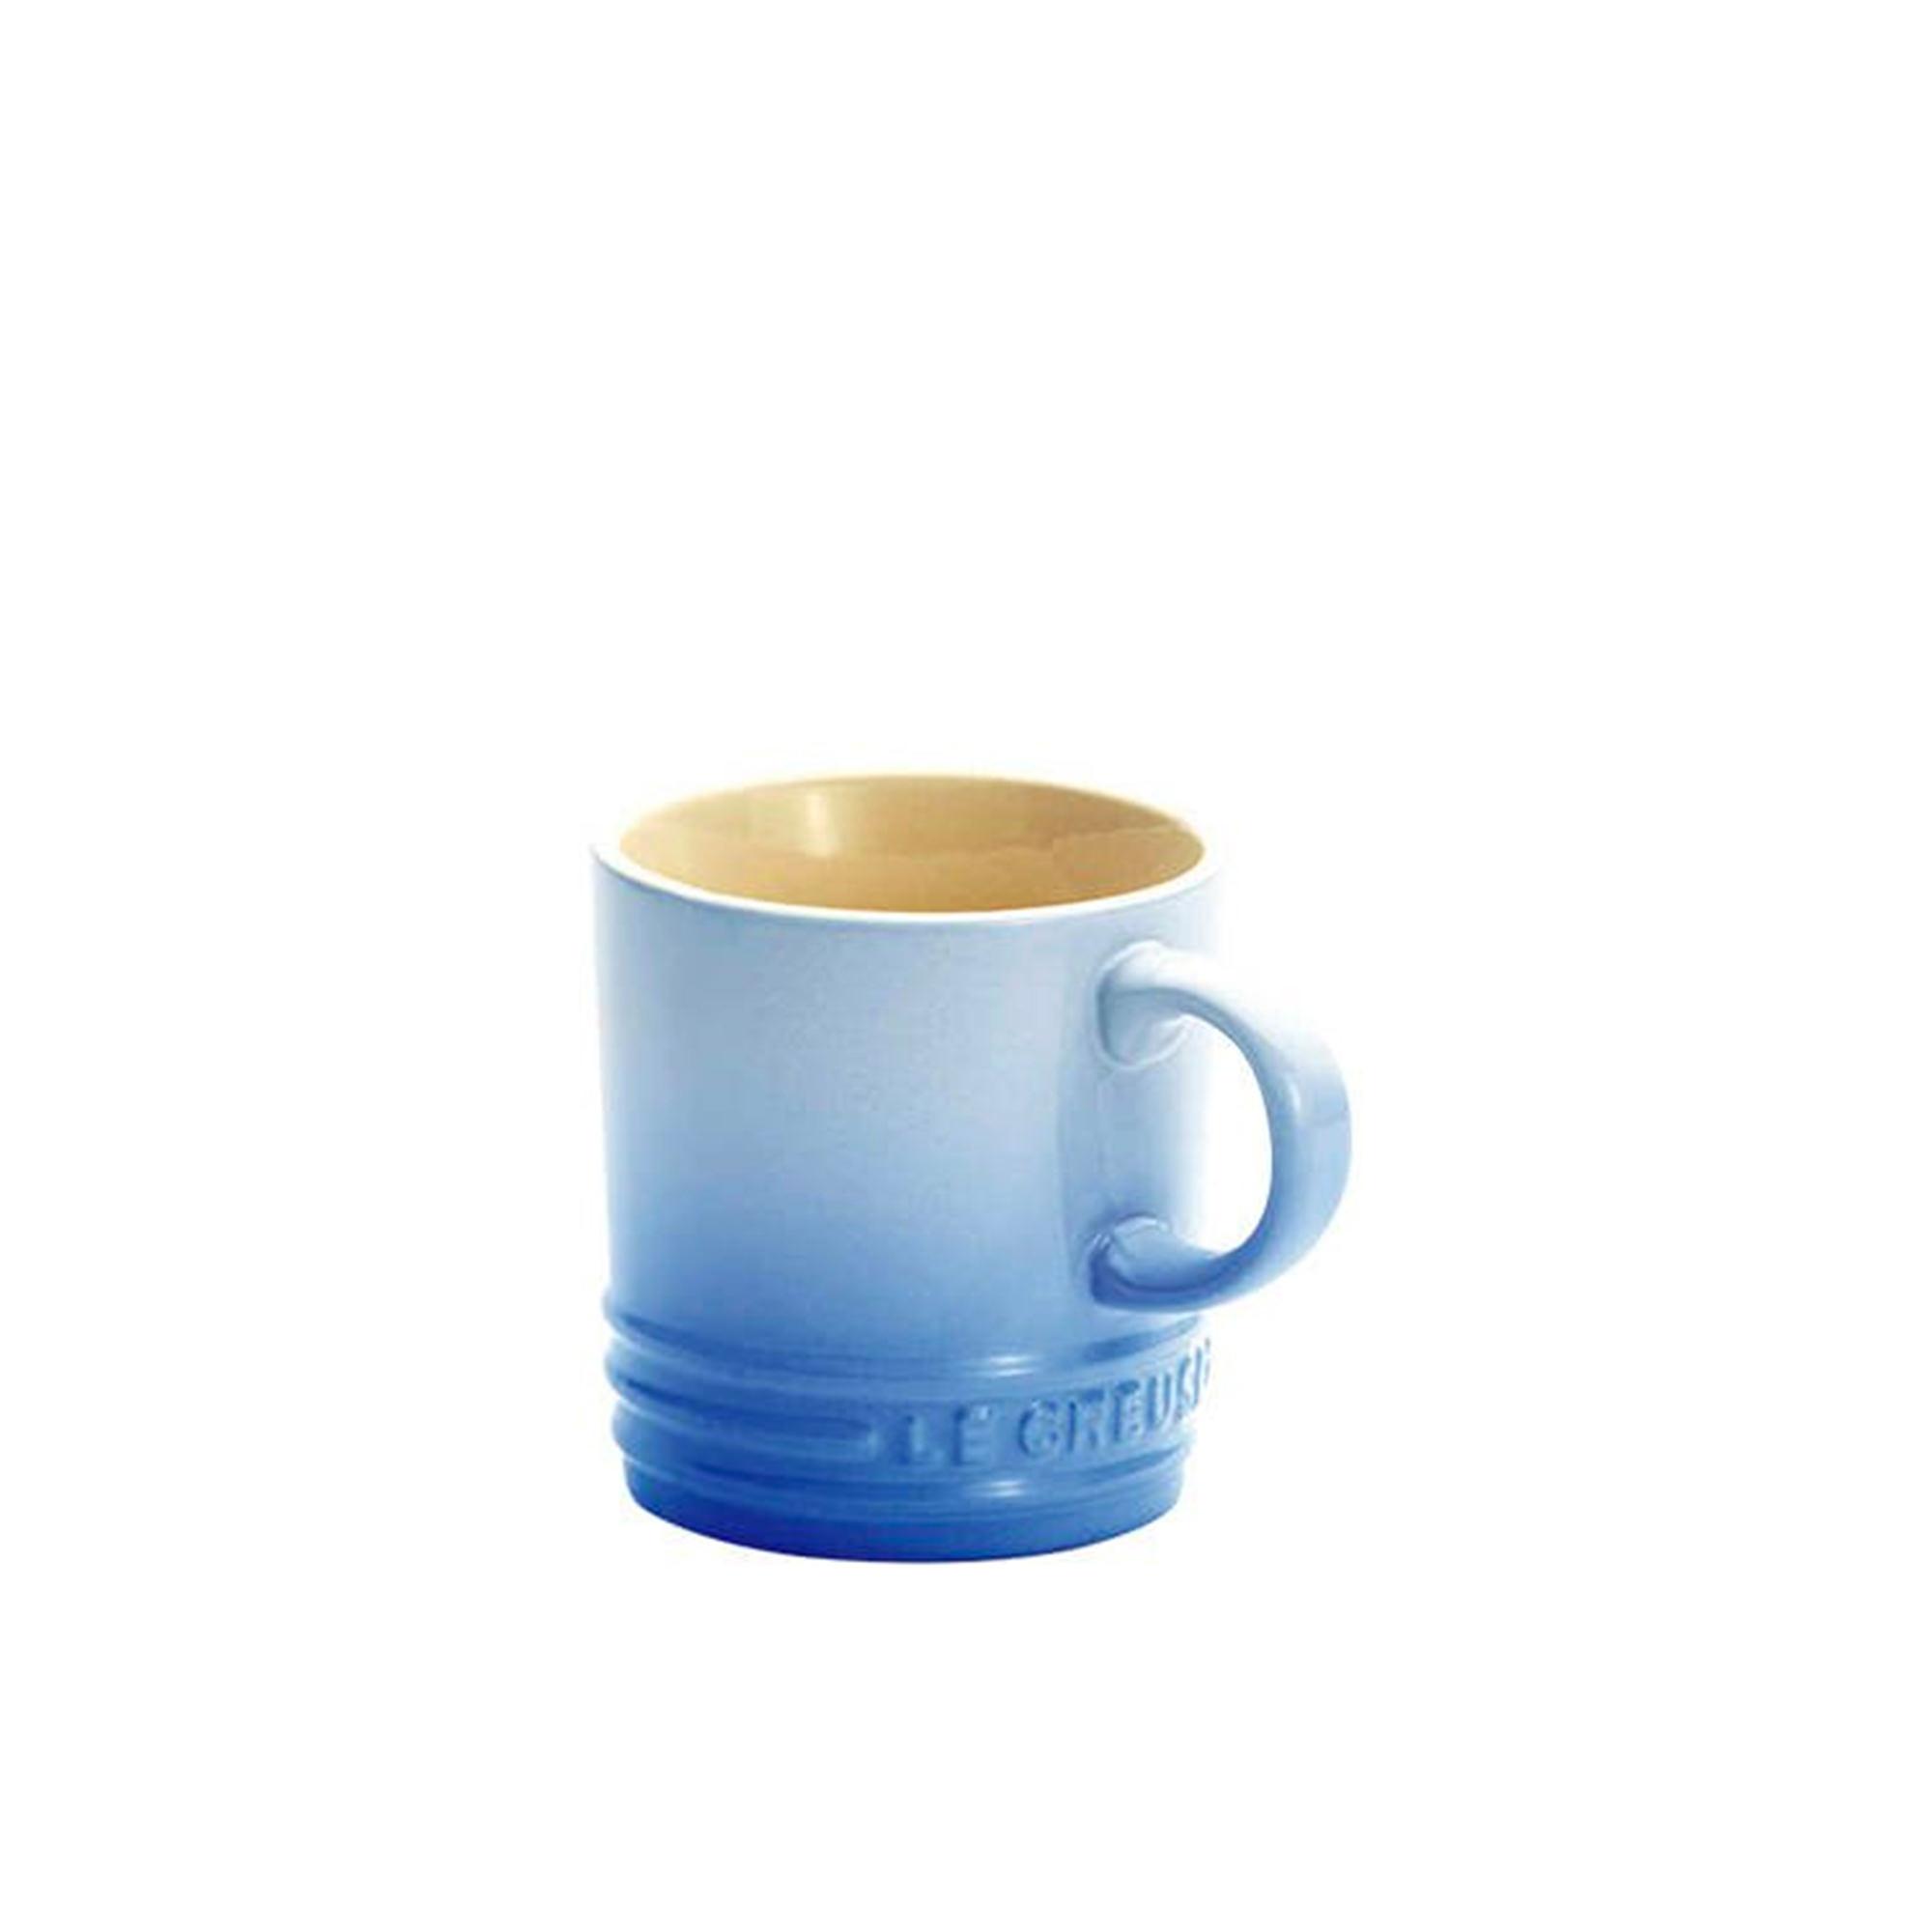 Le Creuset Stoneware Espresso Mug 100ml Coastal Blue Image 1